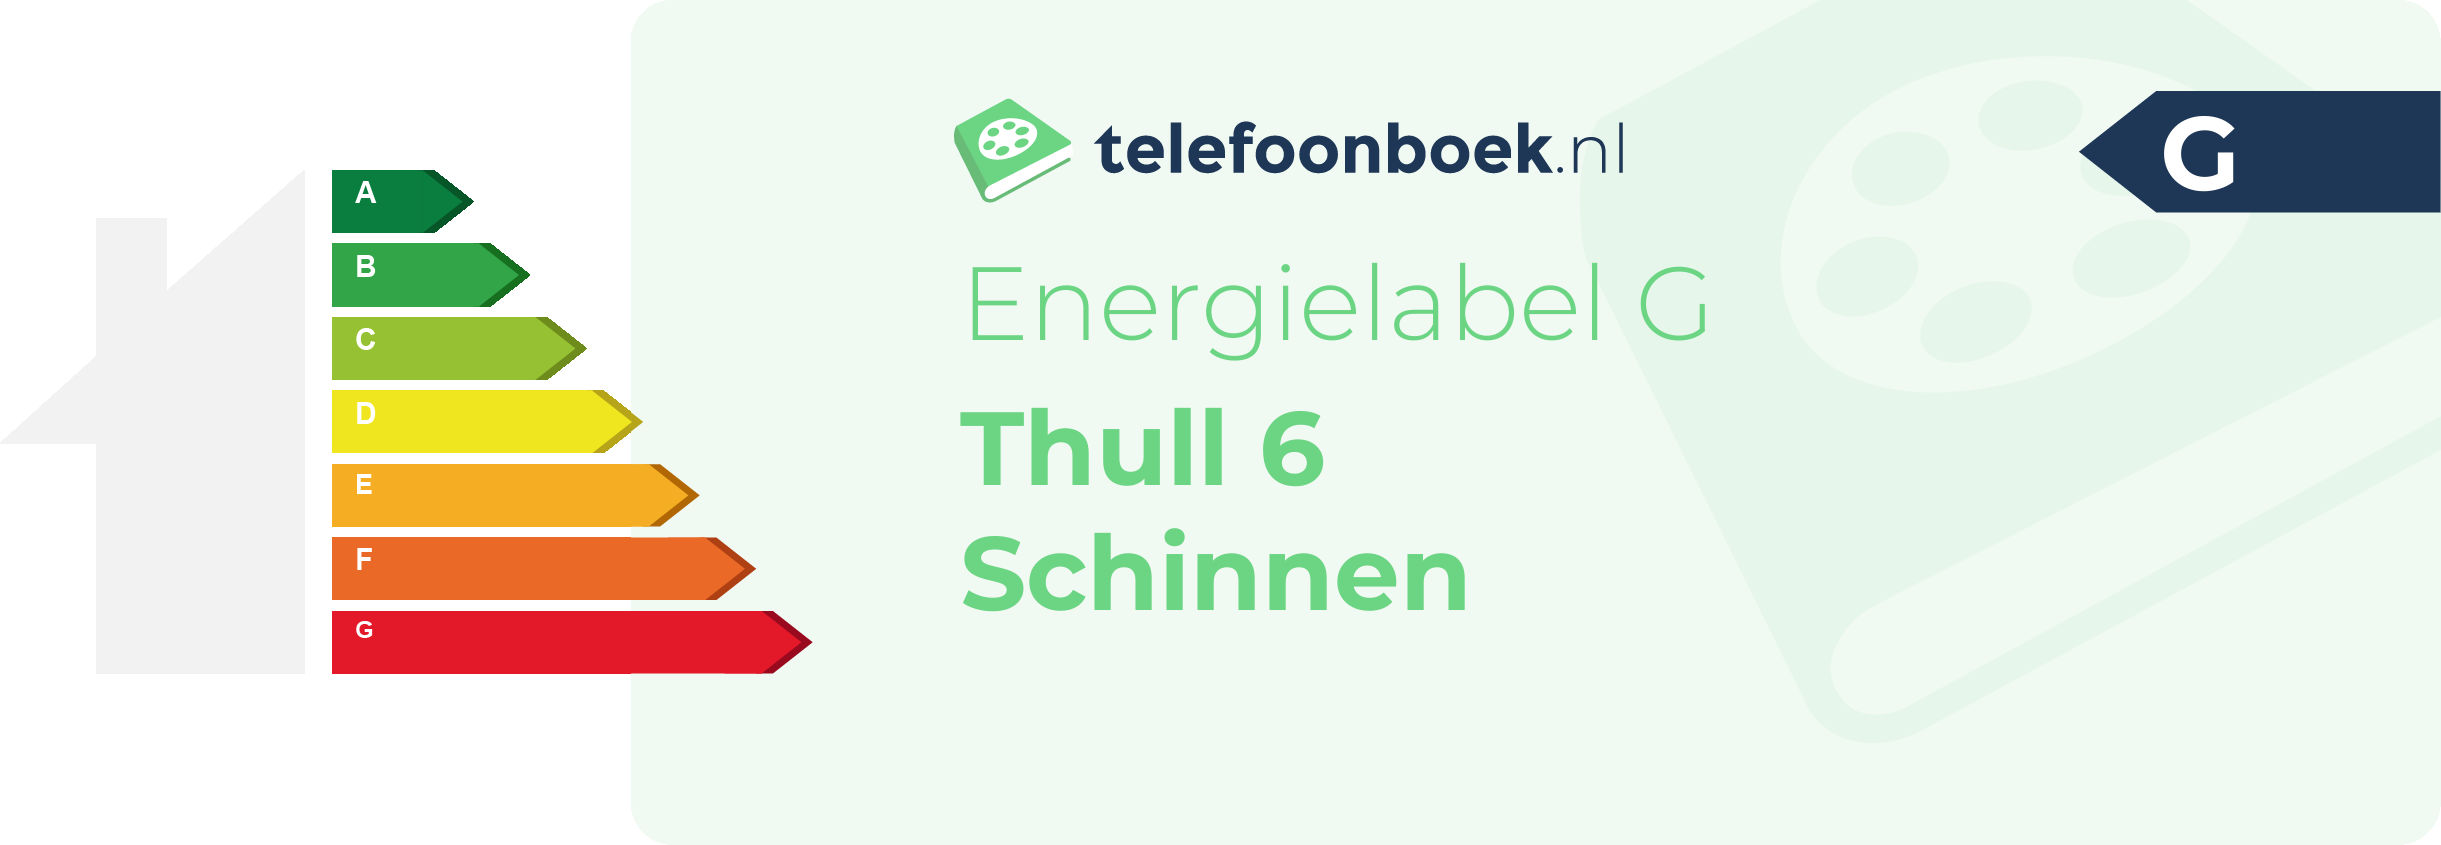 Energielabel Thull 6 Schinnen